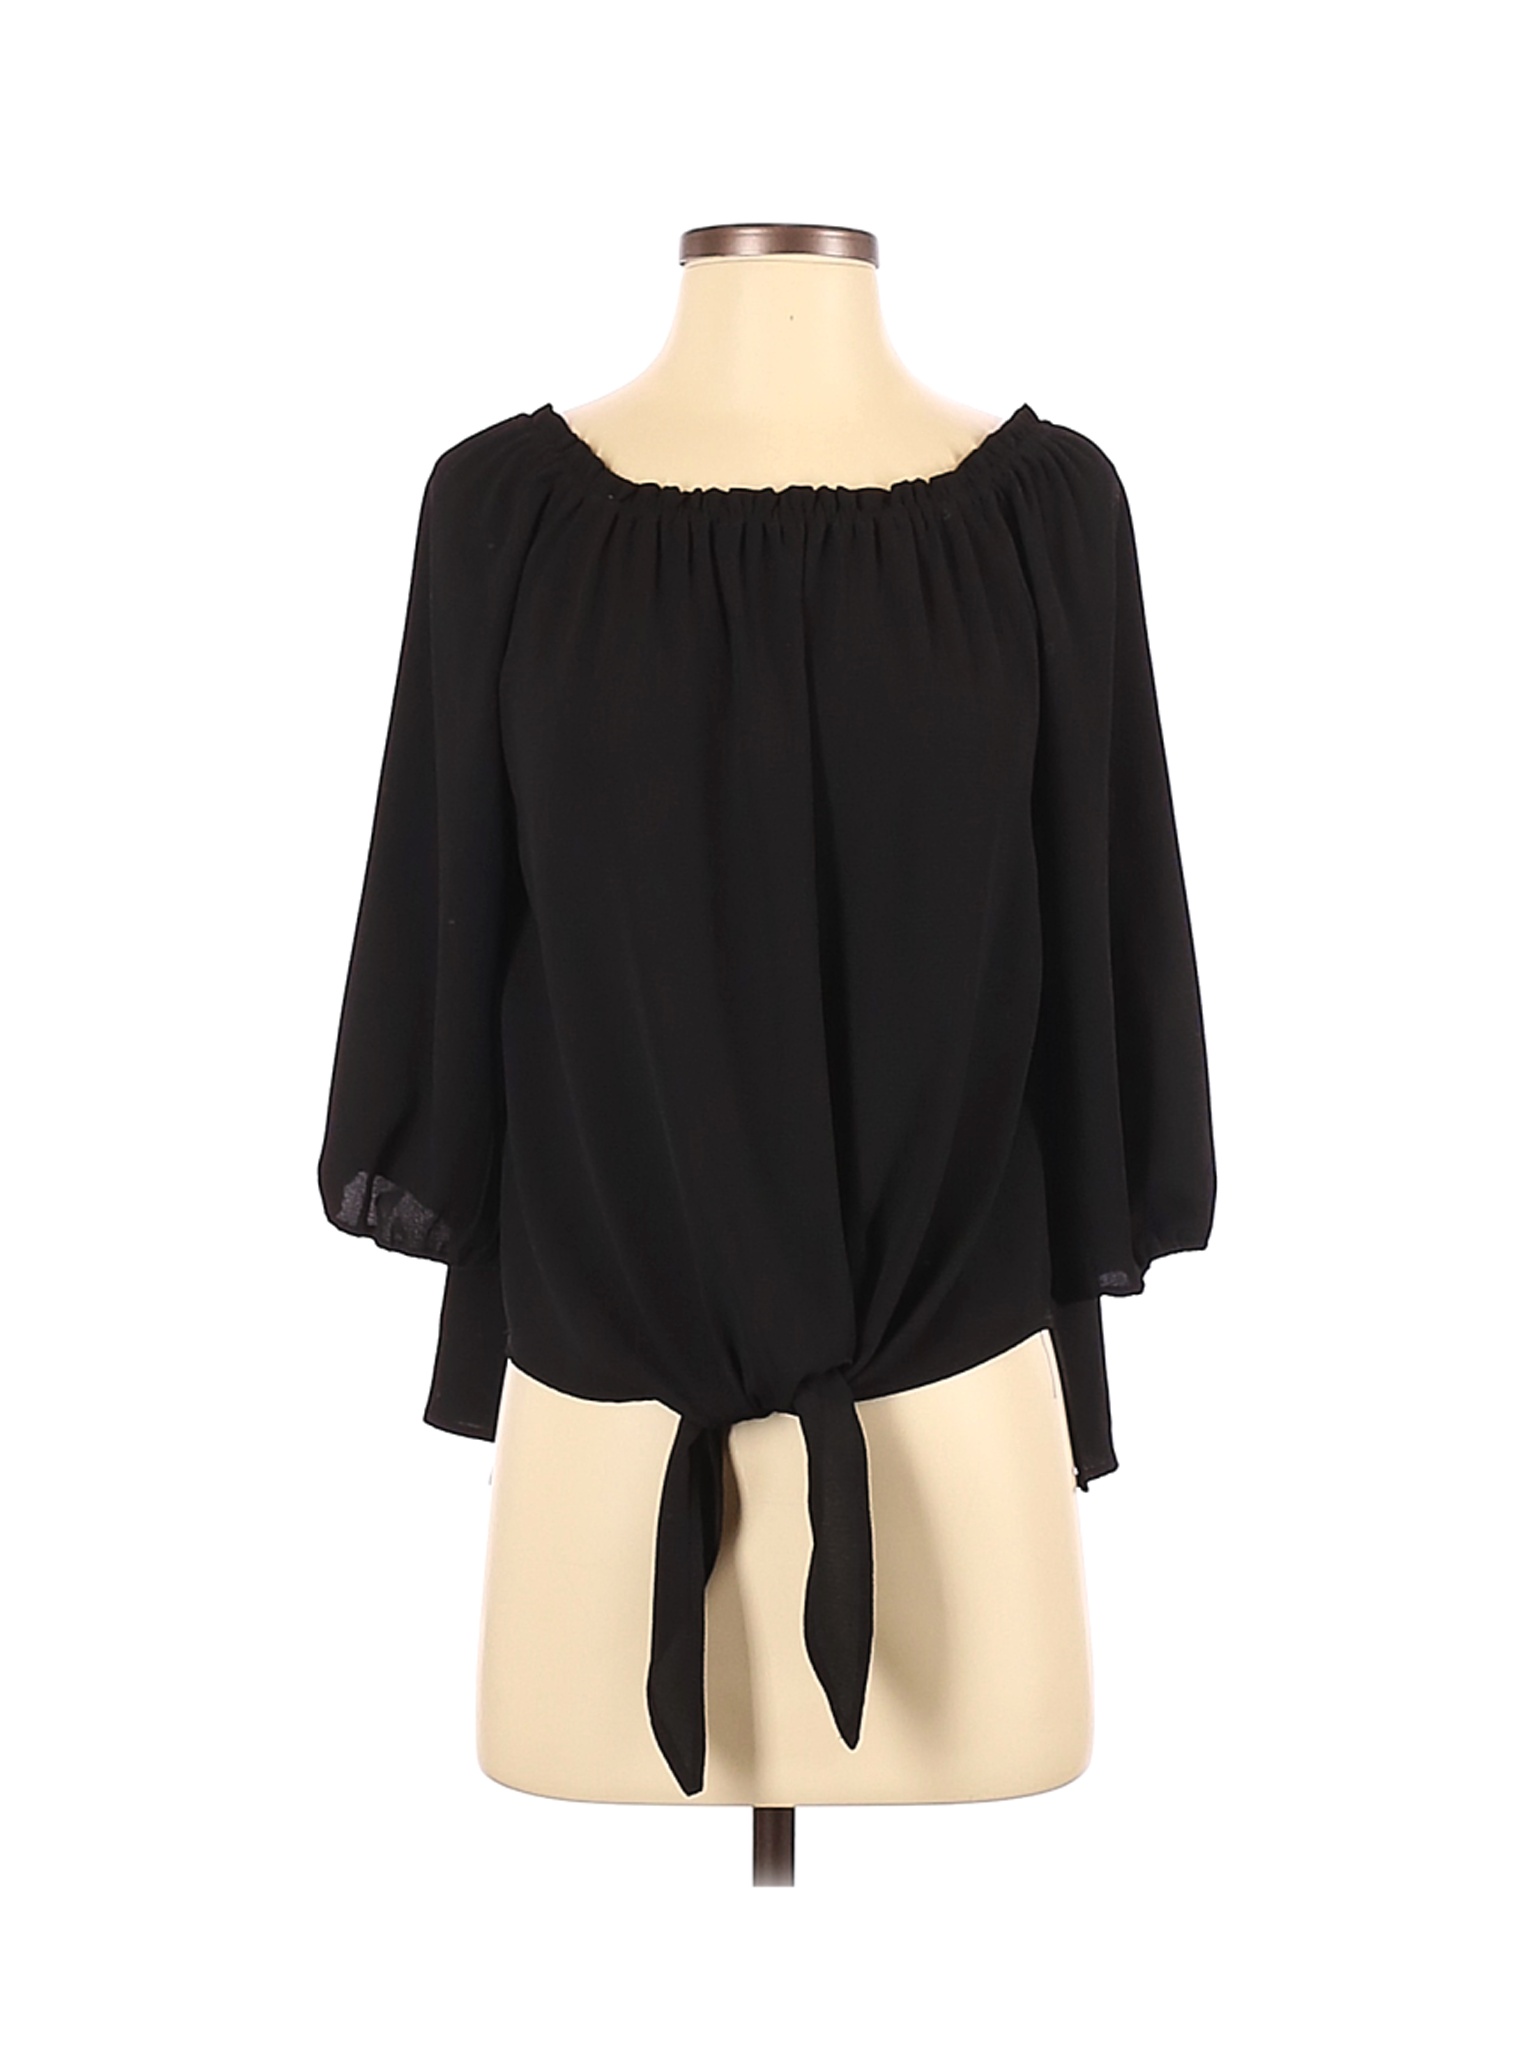 Veronica M. Women Black Long Sleeve Blouse XS | eBay